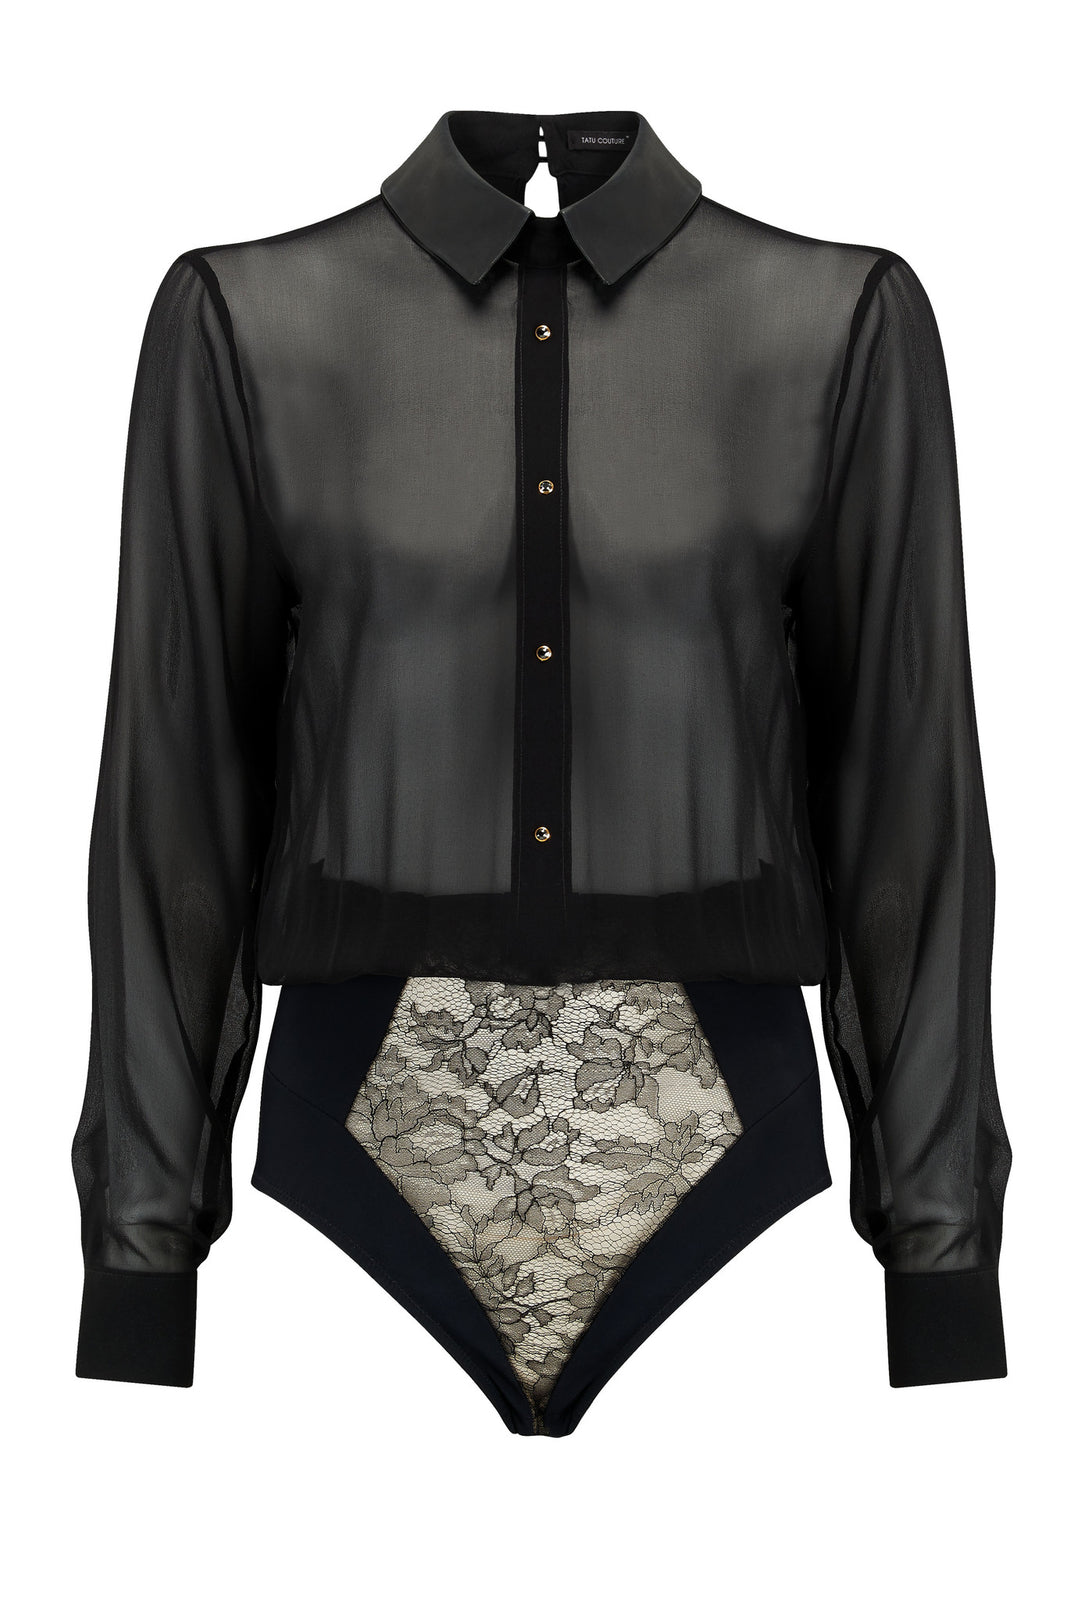 Lula Black Bodysuit Blouse | Designer Bodysuits– Tatu Couture